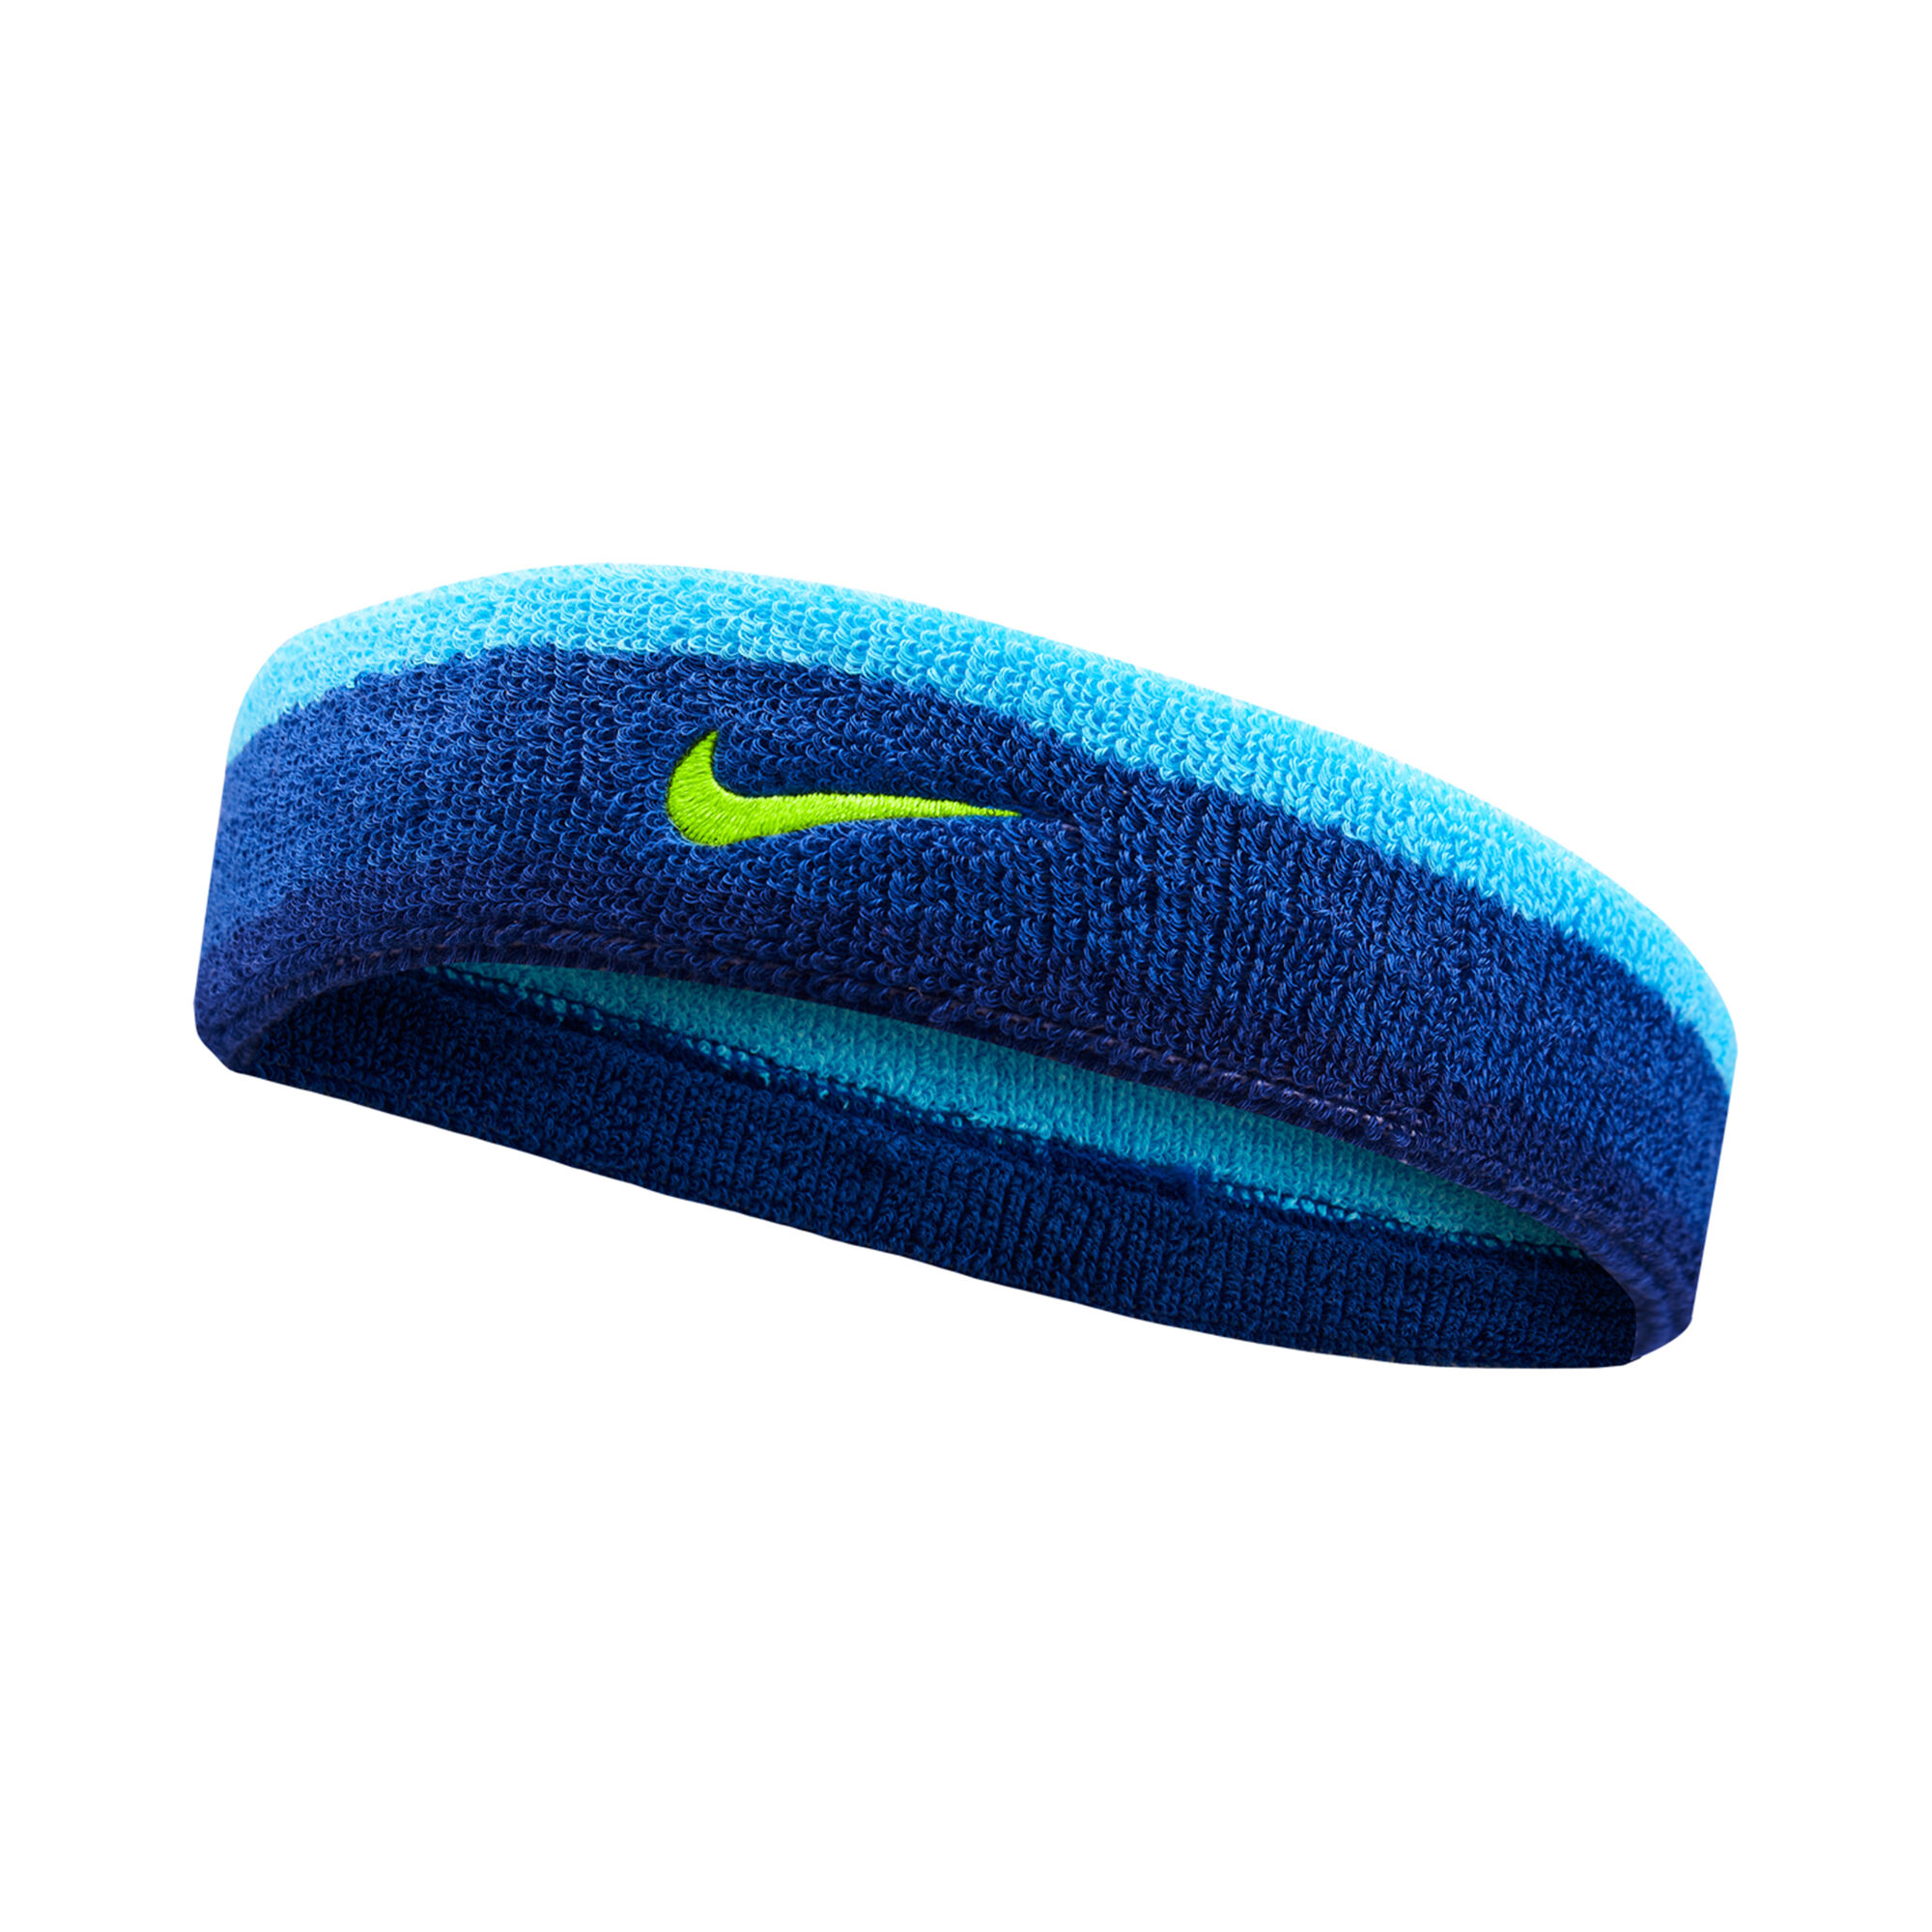 Nike Pandebånd - Blå, Grøn online | Tennis-Point